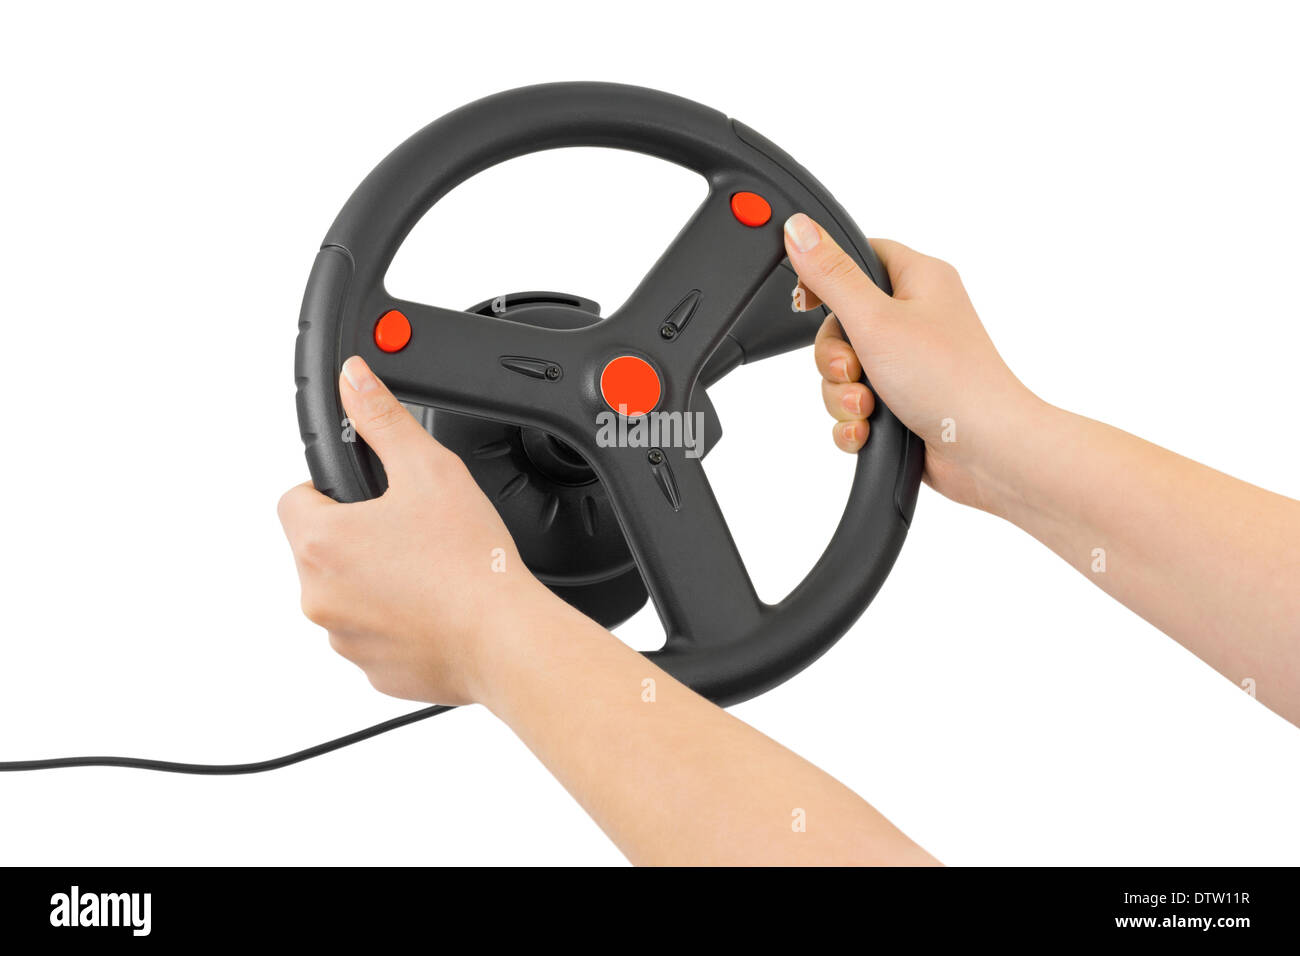 Computer steering wheel and hands Stock Photo